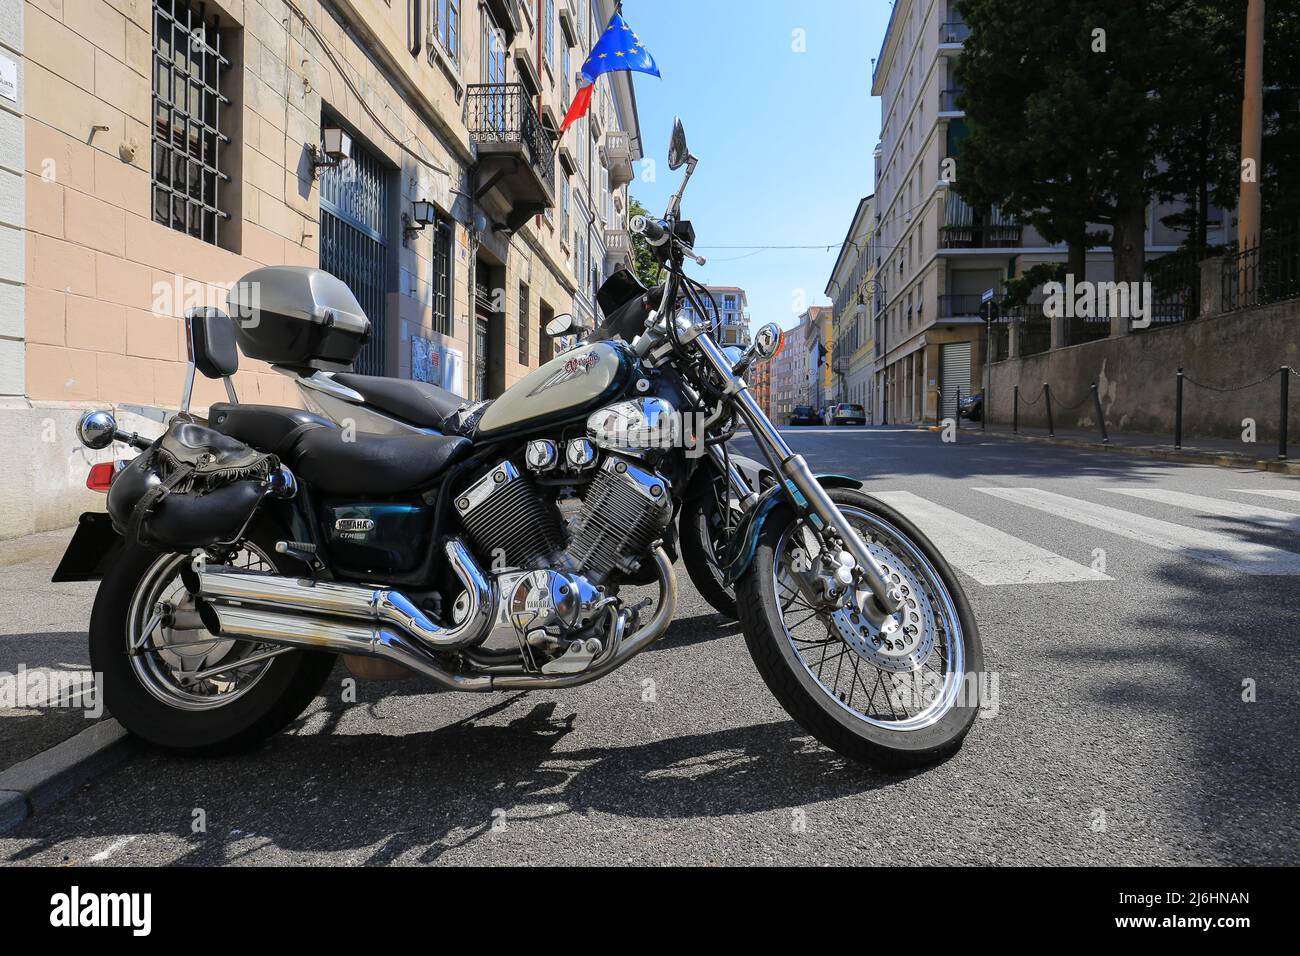 Motorcycle chopper Yamaha Virago on the street Stock Photo